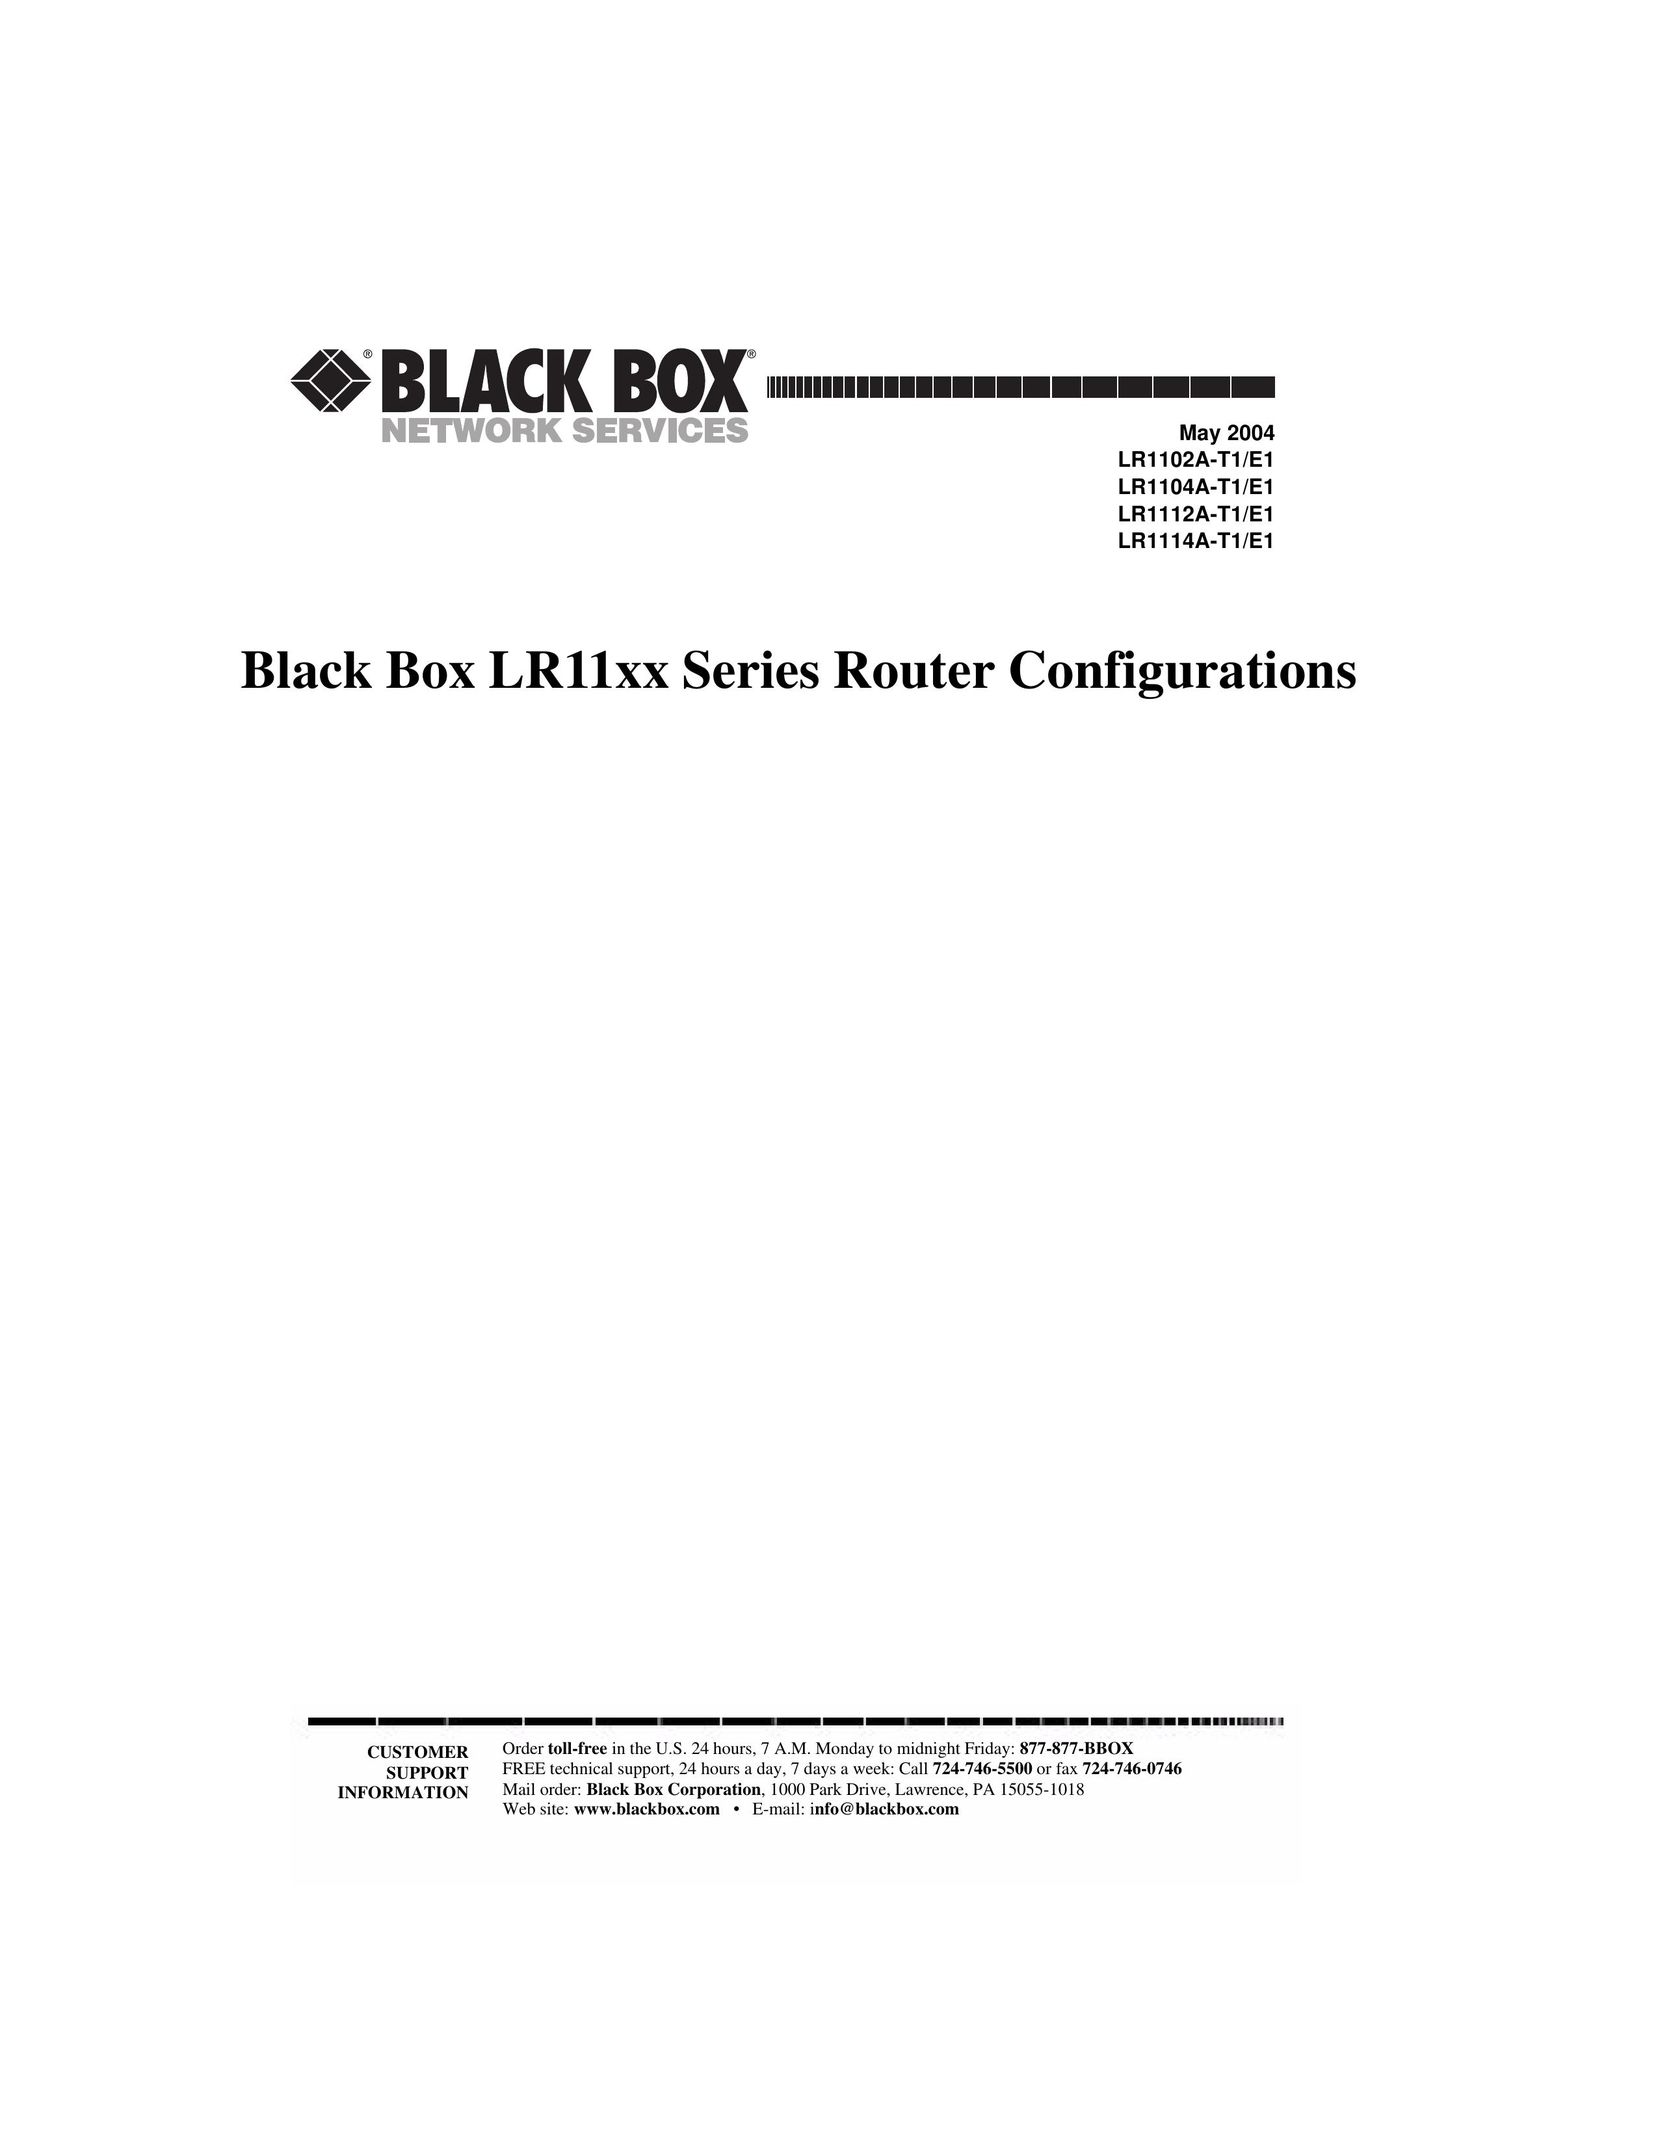 Black Box LR1104A-T1/E1 Network Router User Manual